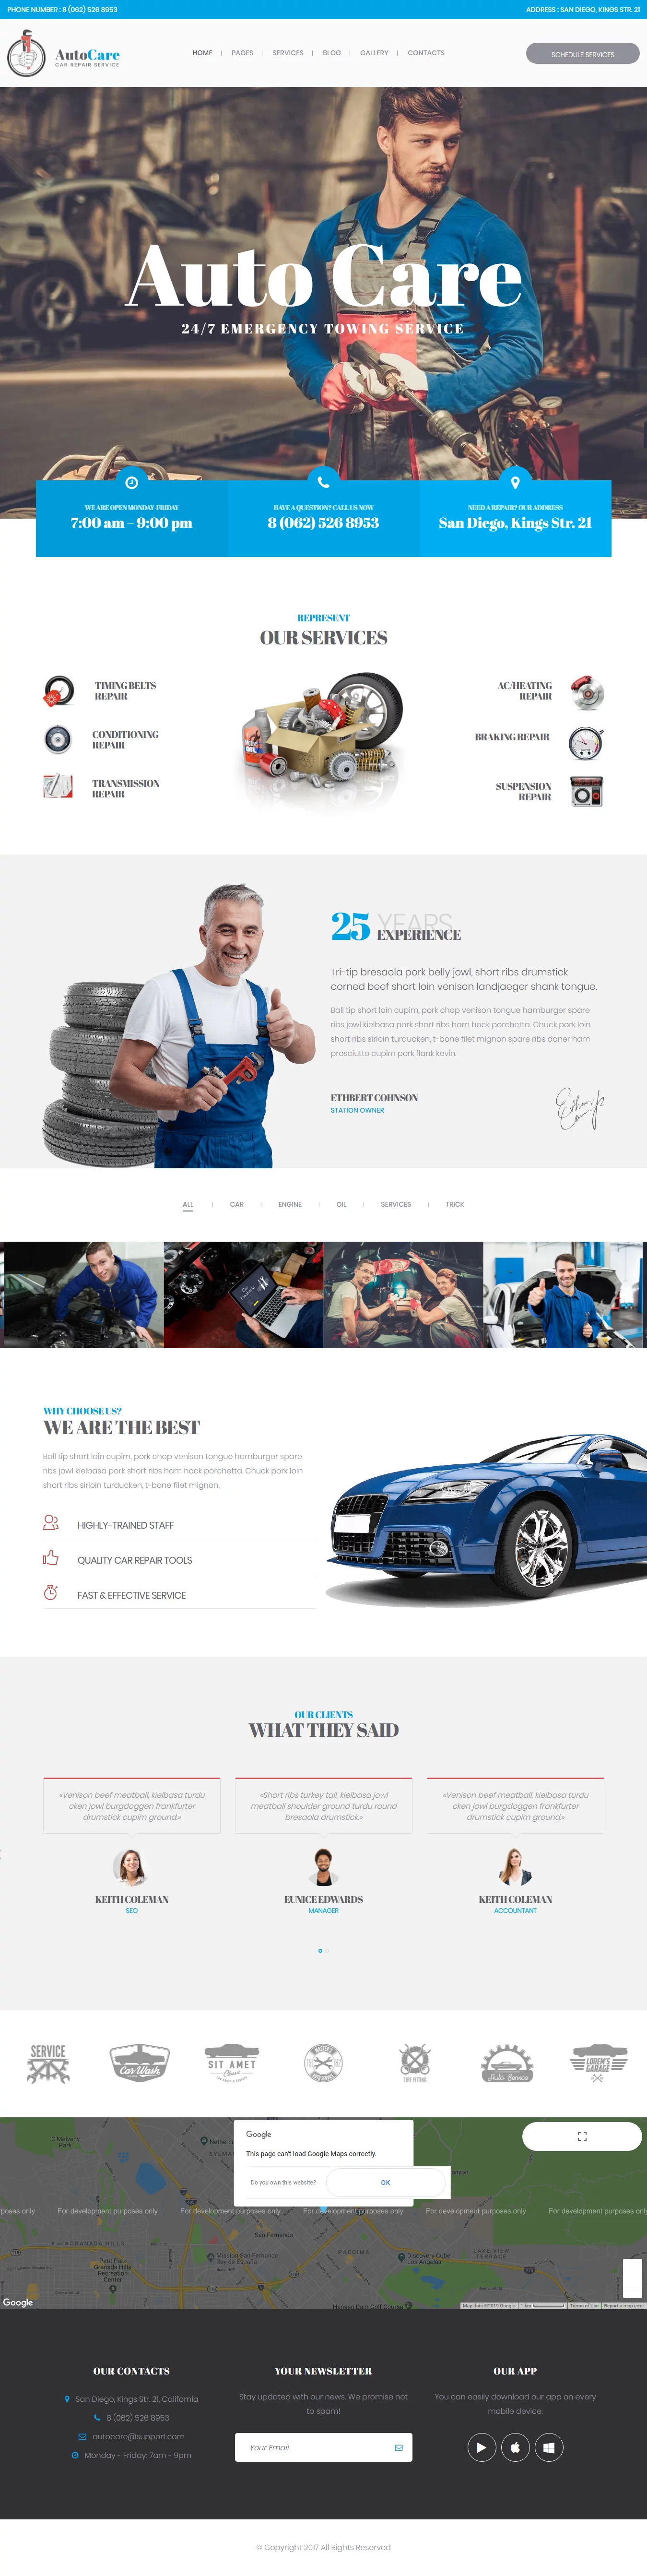 AutoCare - Best Premium Automobile WordPress Theme